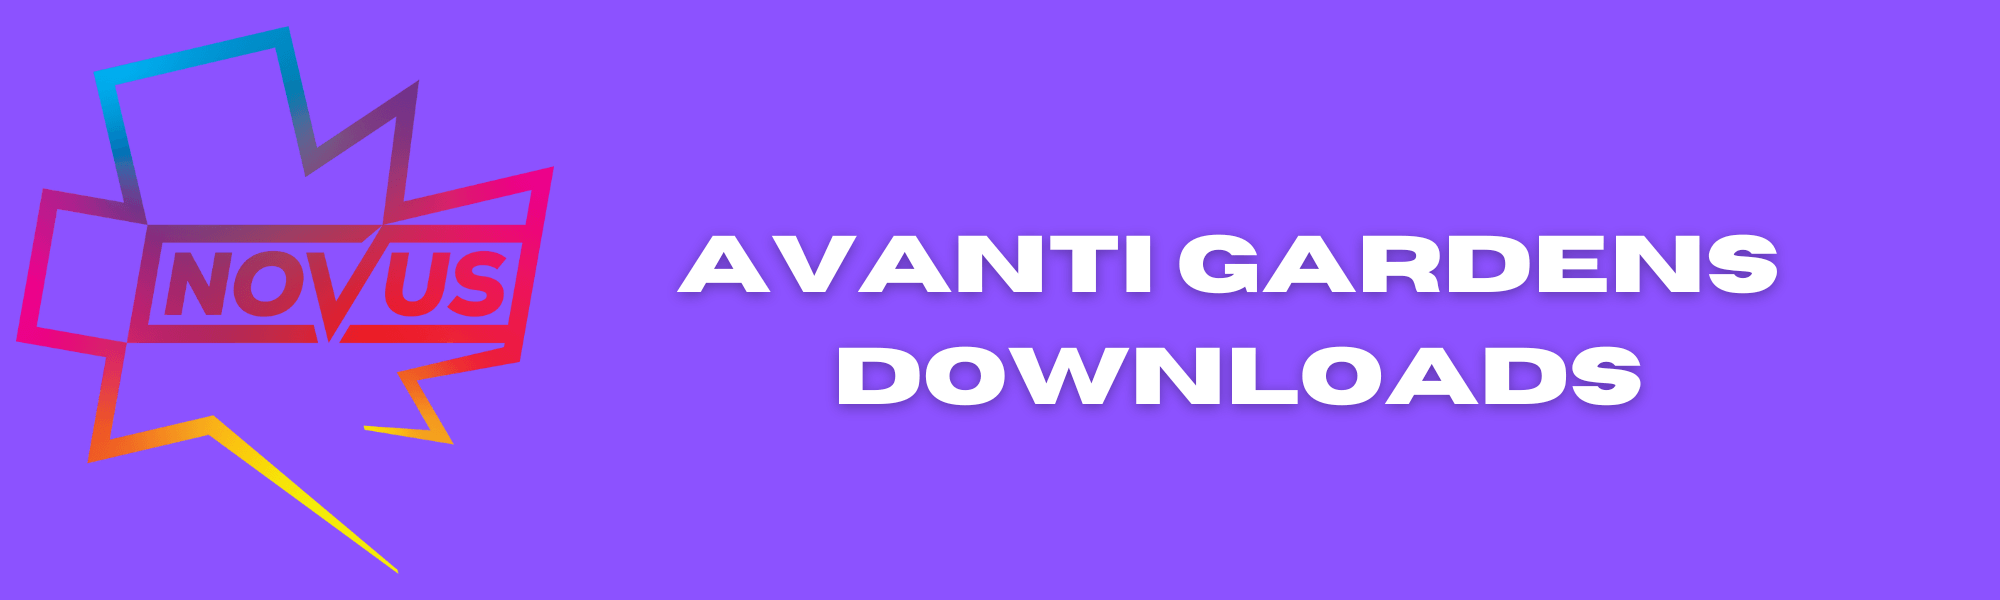 Avanti Gardens Downloads